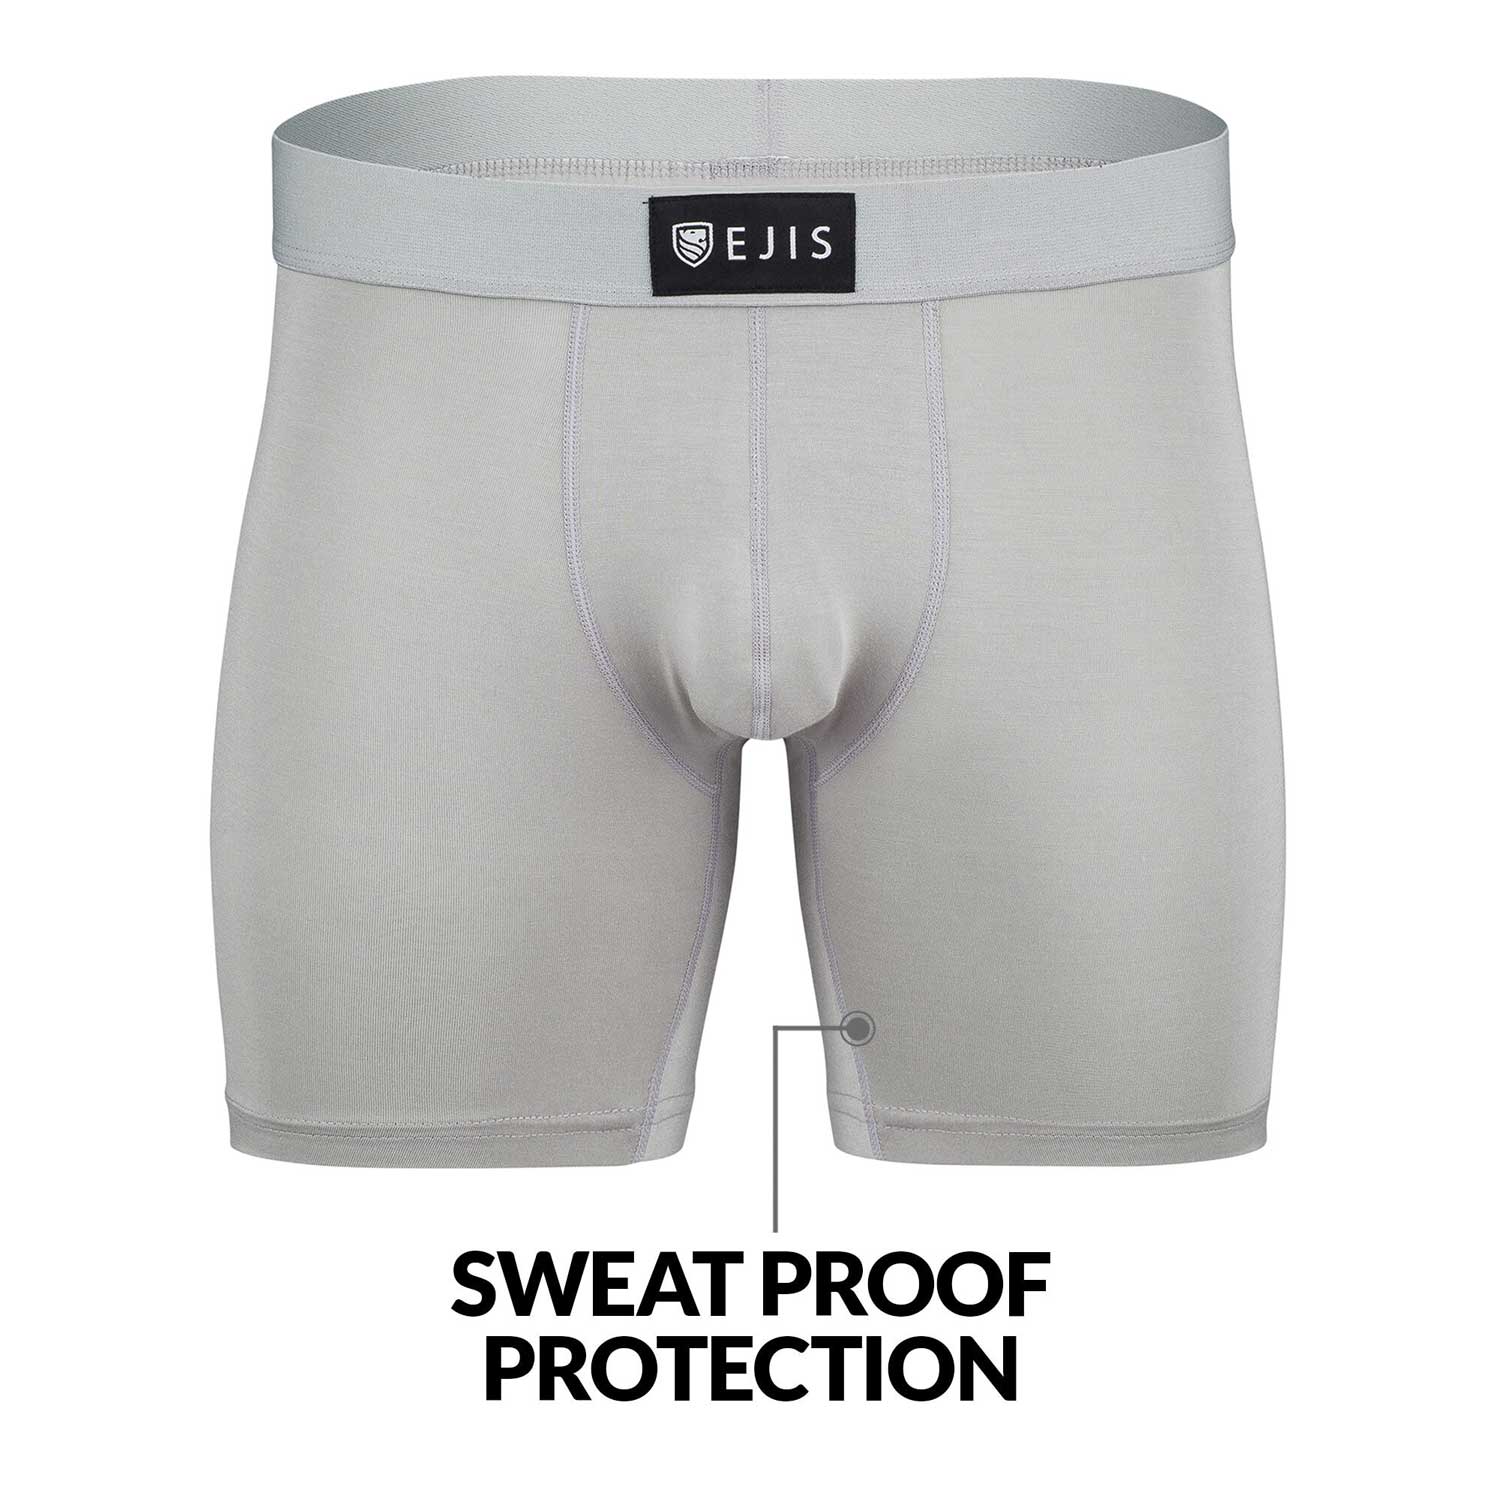 Soft sweat proof underwear For Comfort 